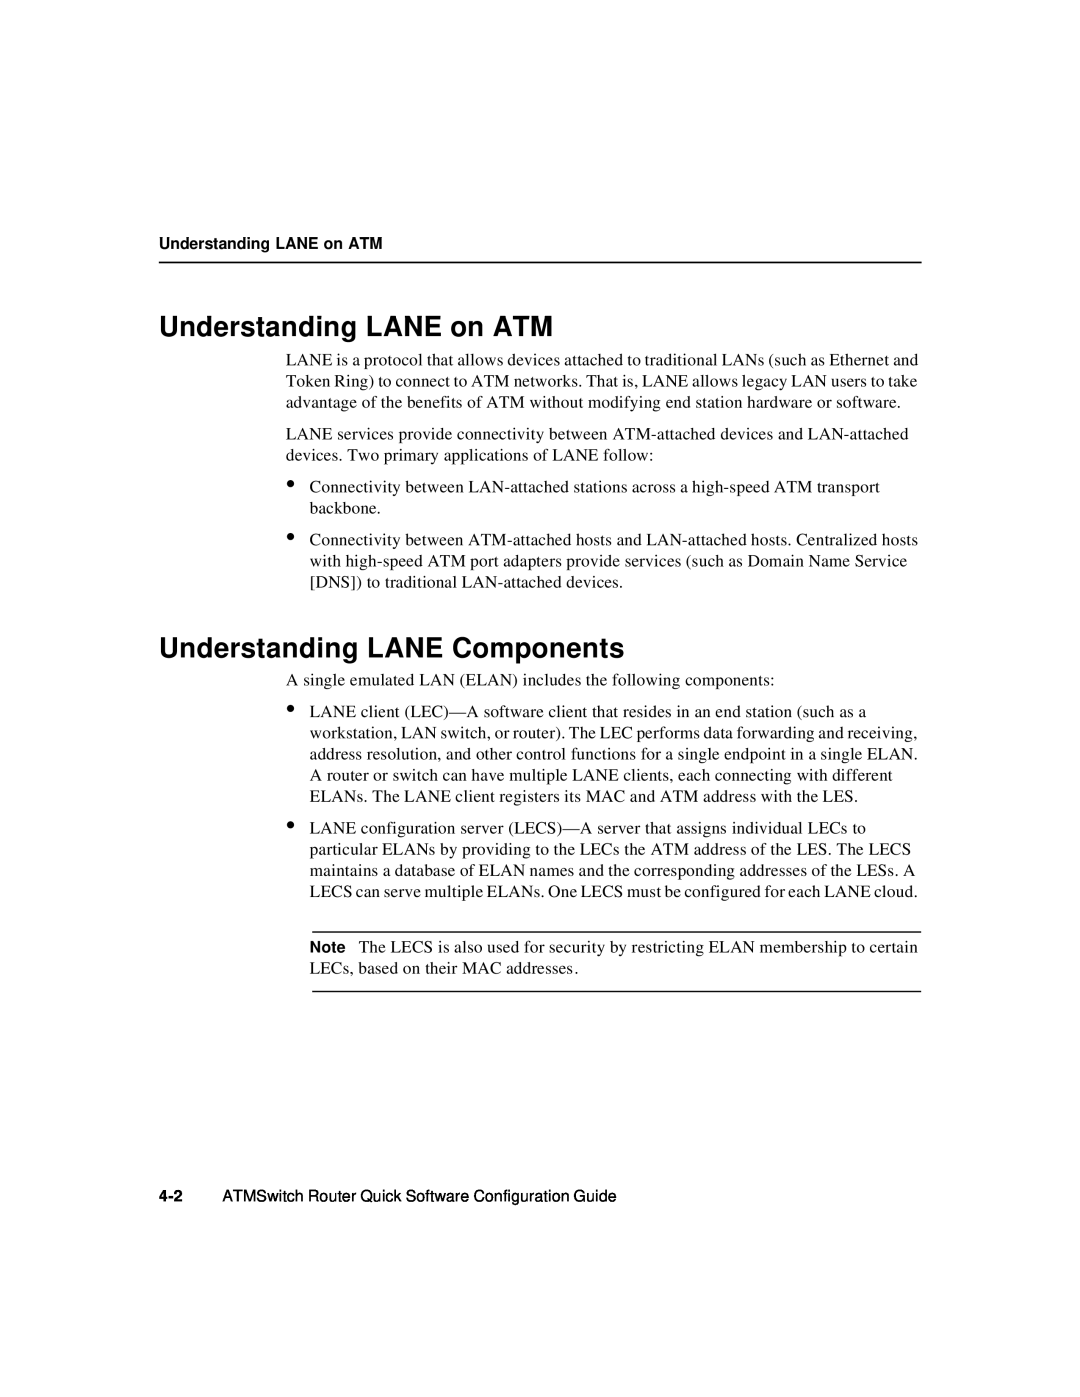 Cisco Systems 78-6897-01 manual Understanding LANE on ATM, Understanding LANE Components 